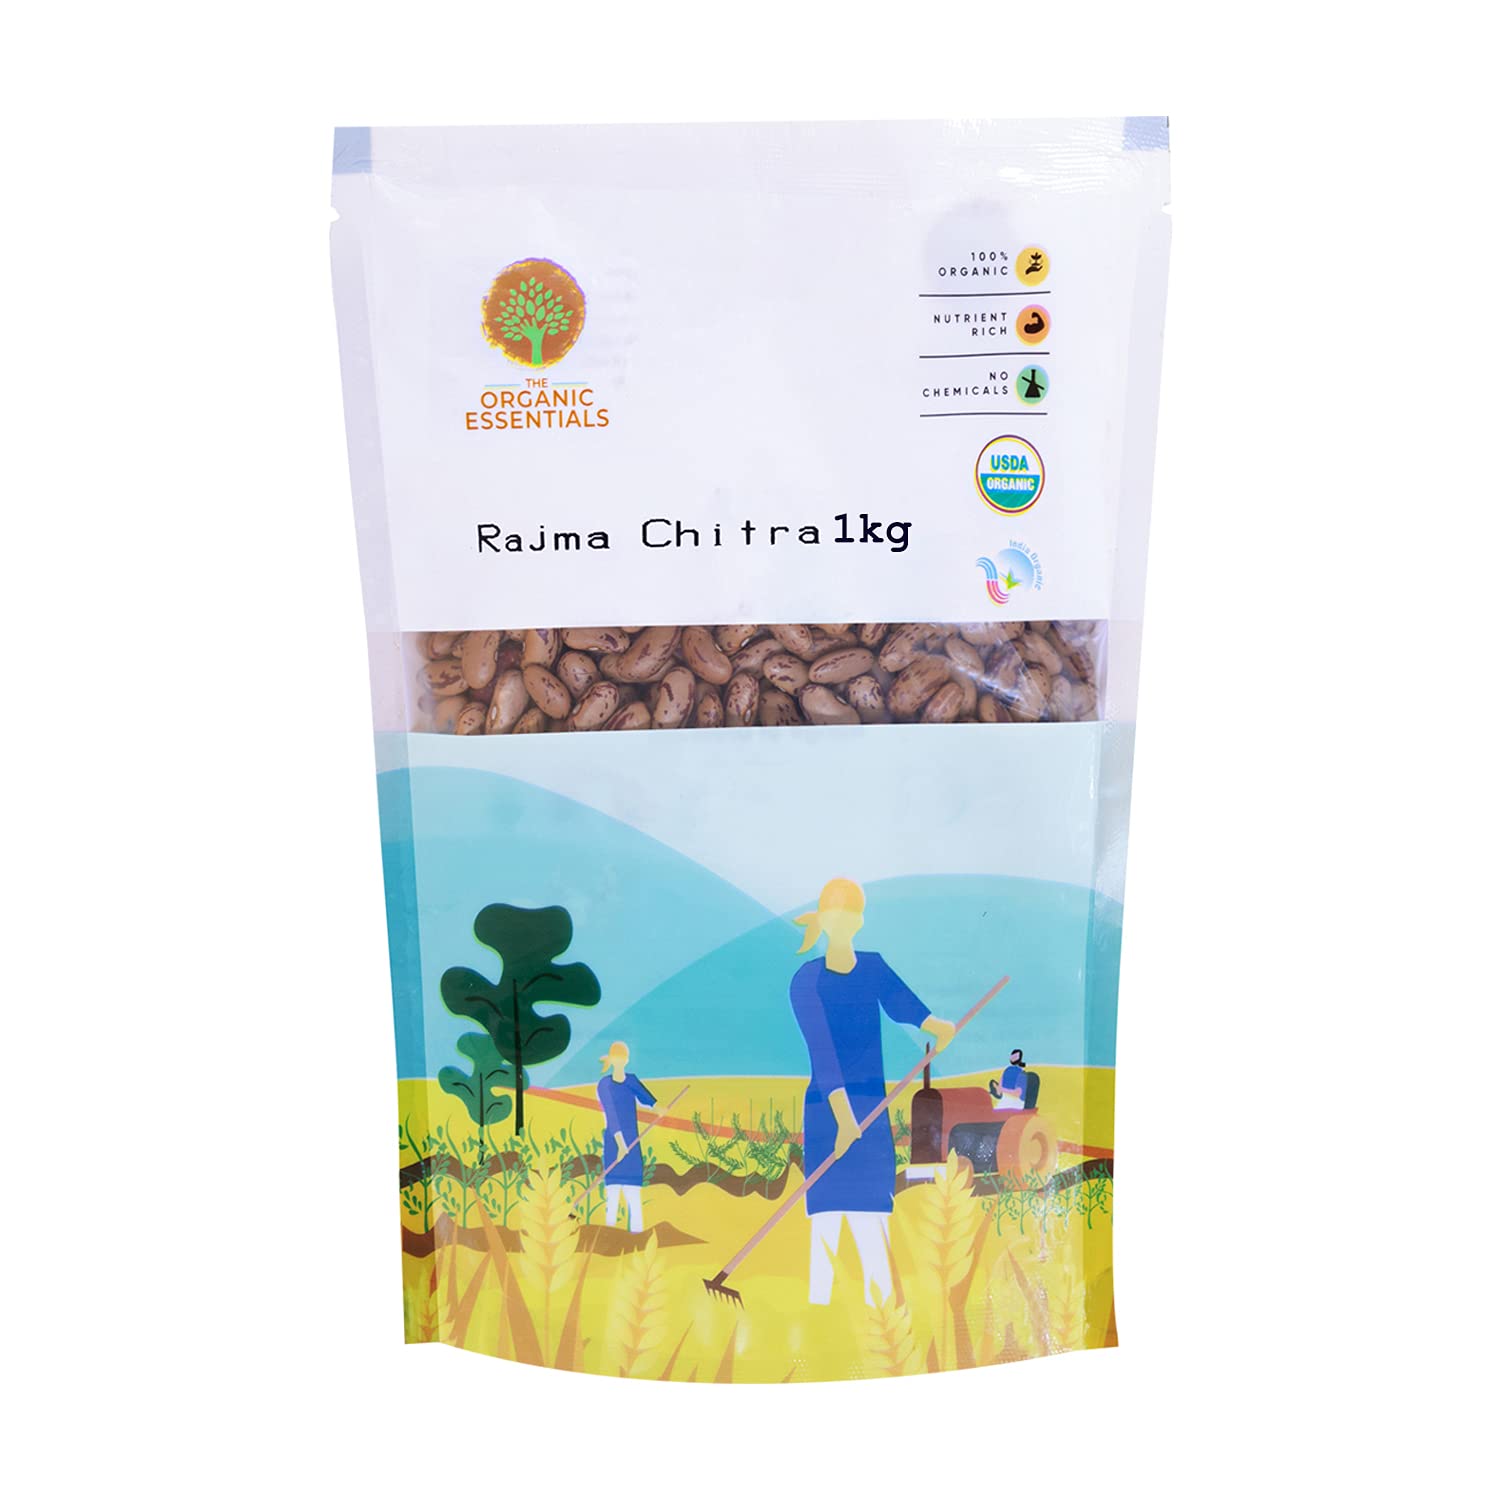 The Organic Essentials  Rajma Chitra Image